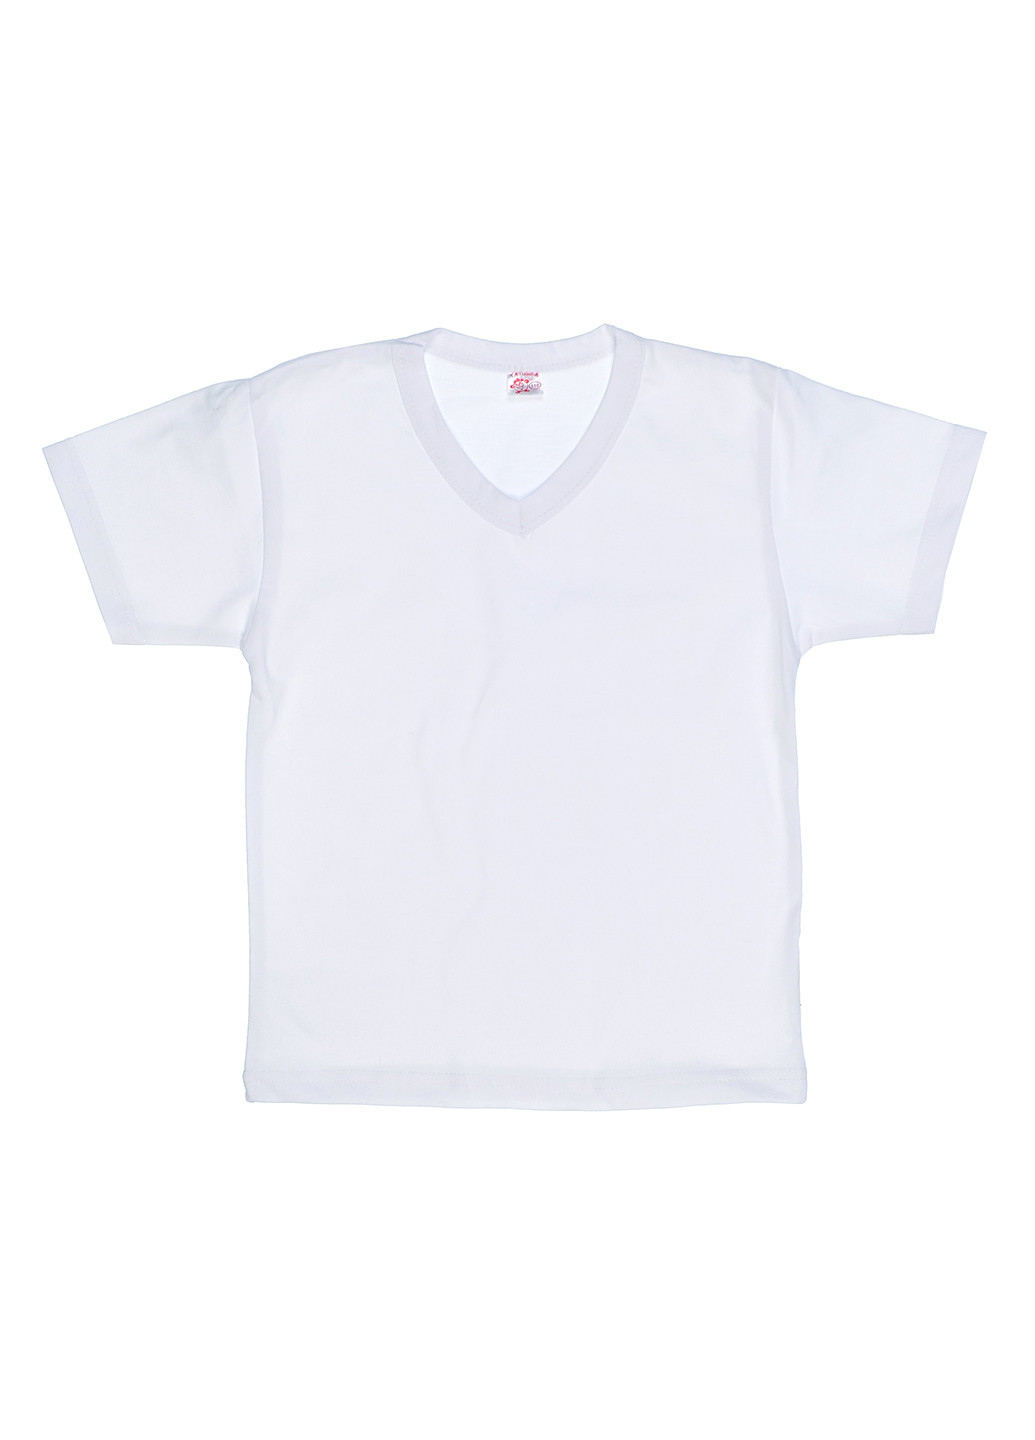 Белая летняя футболка с коротким рукавом Татошка